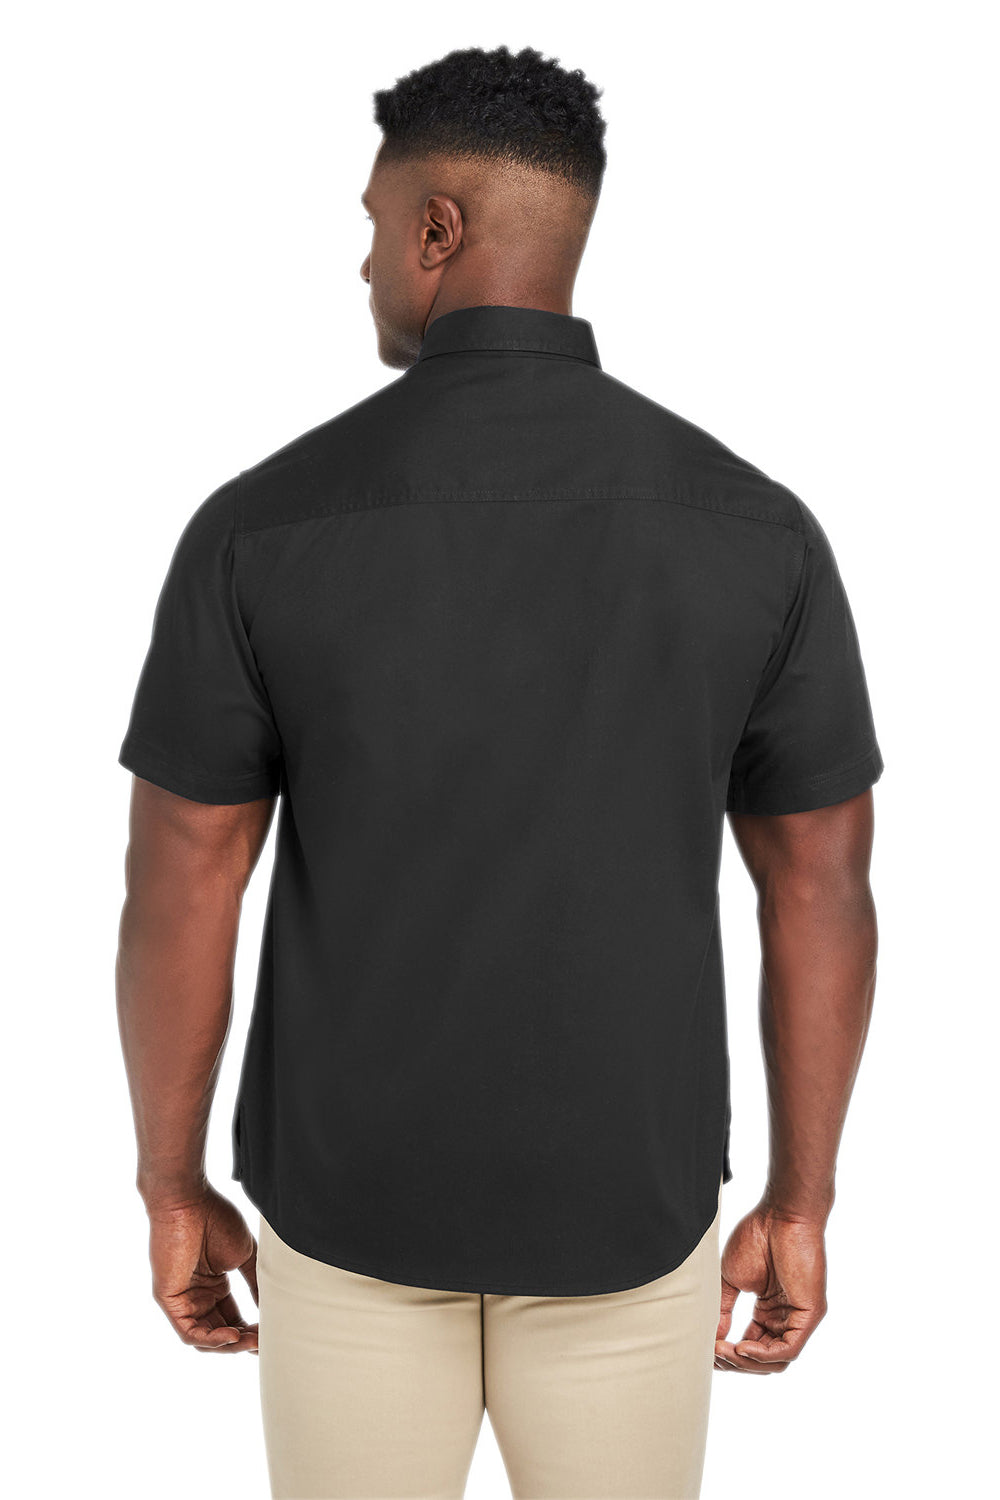 Harriton M585 Mens Advantage Short Sleeve Button Down Shirt w/ Double Pockets Black Back